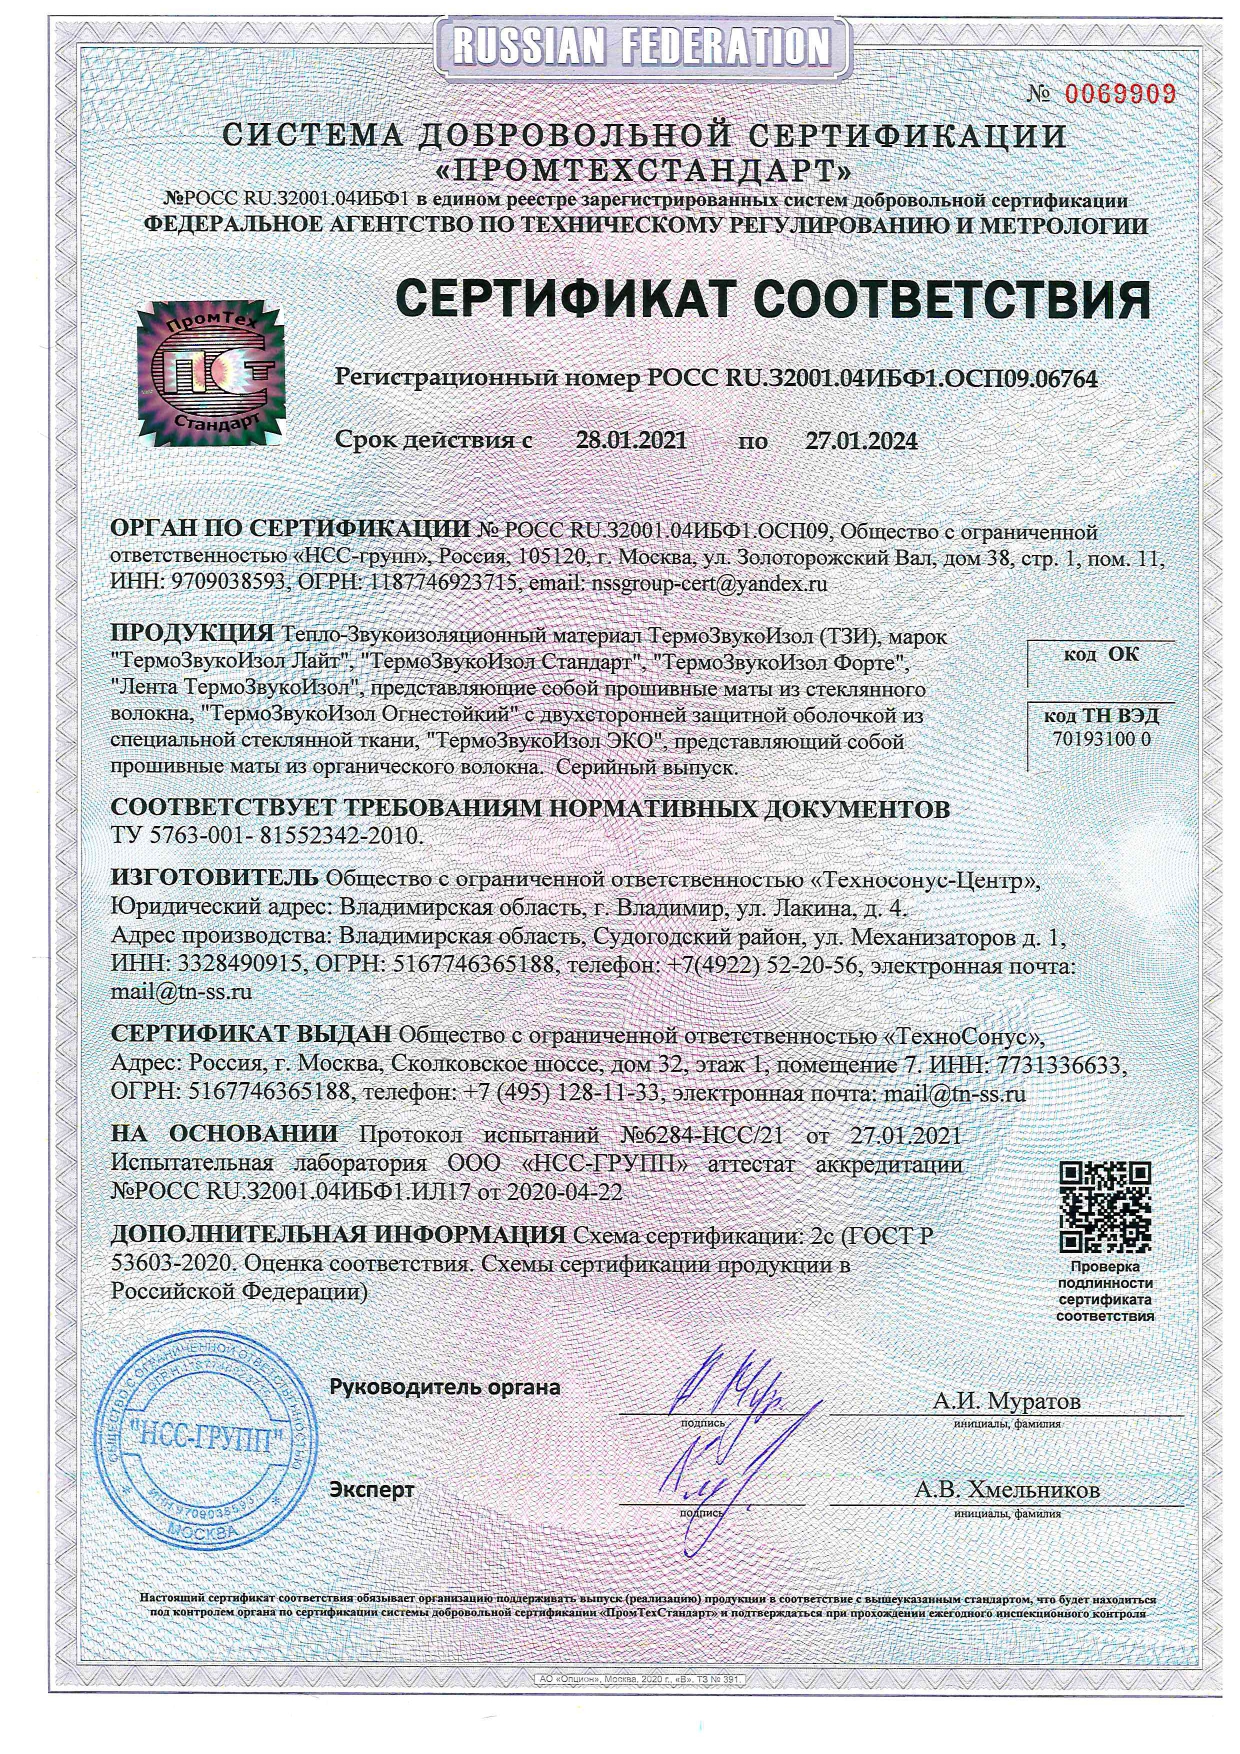 Сертификат соответствия ГОСТ-Р с 28.01.2021 по 27.01.2024